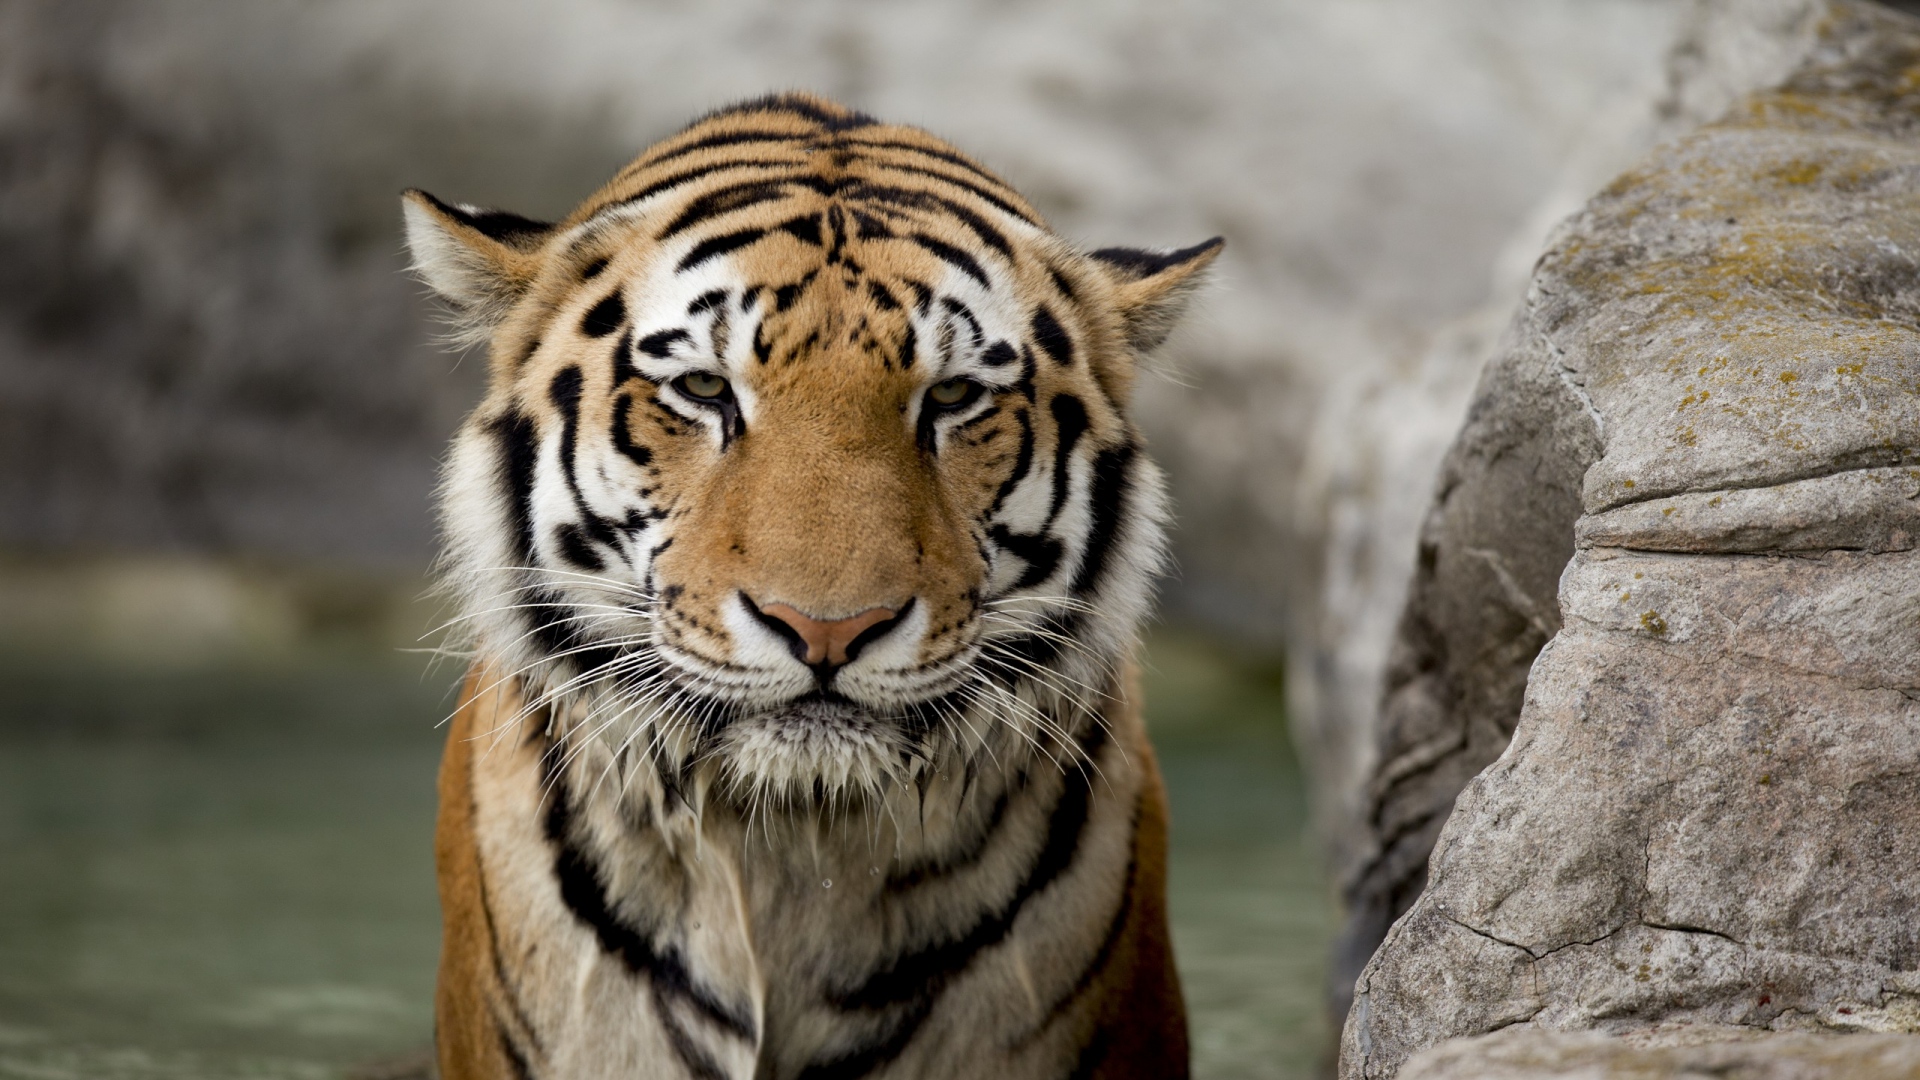 Wallpaper Tiger Face Stone Big Cat Full HD 1080p